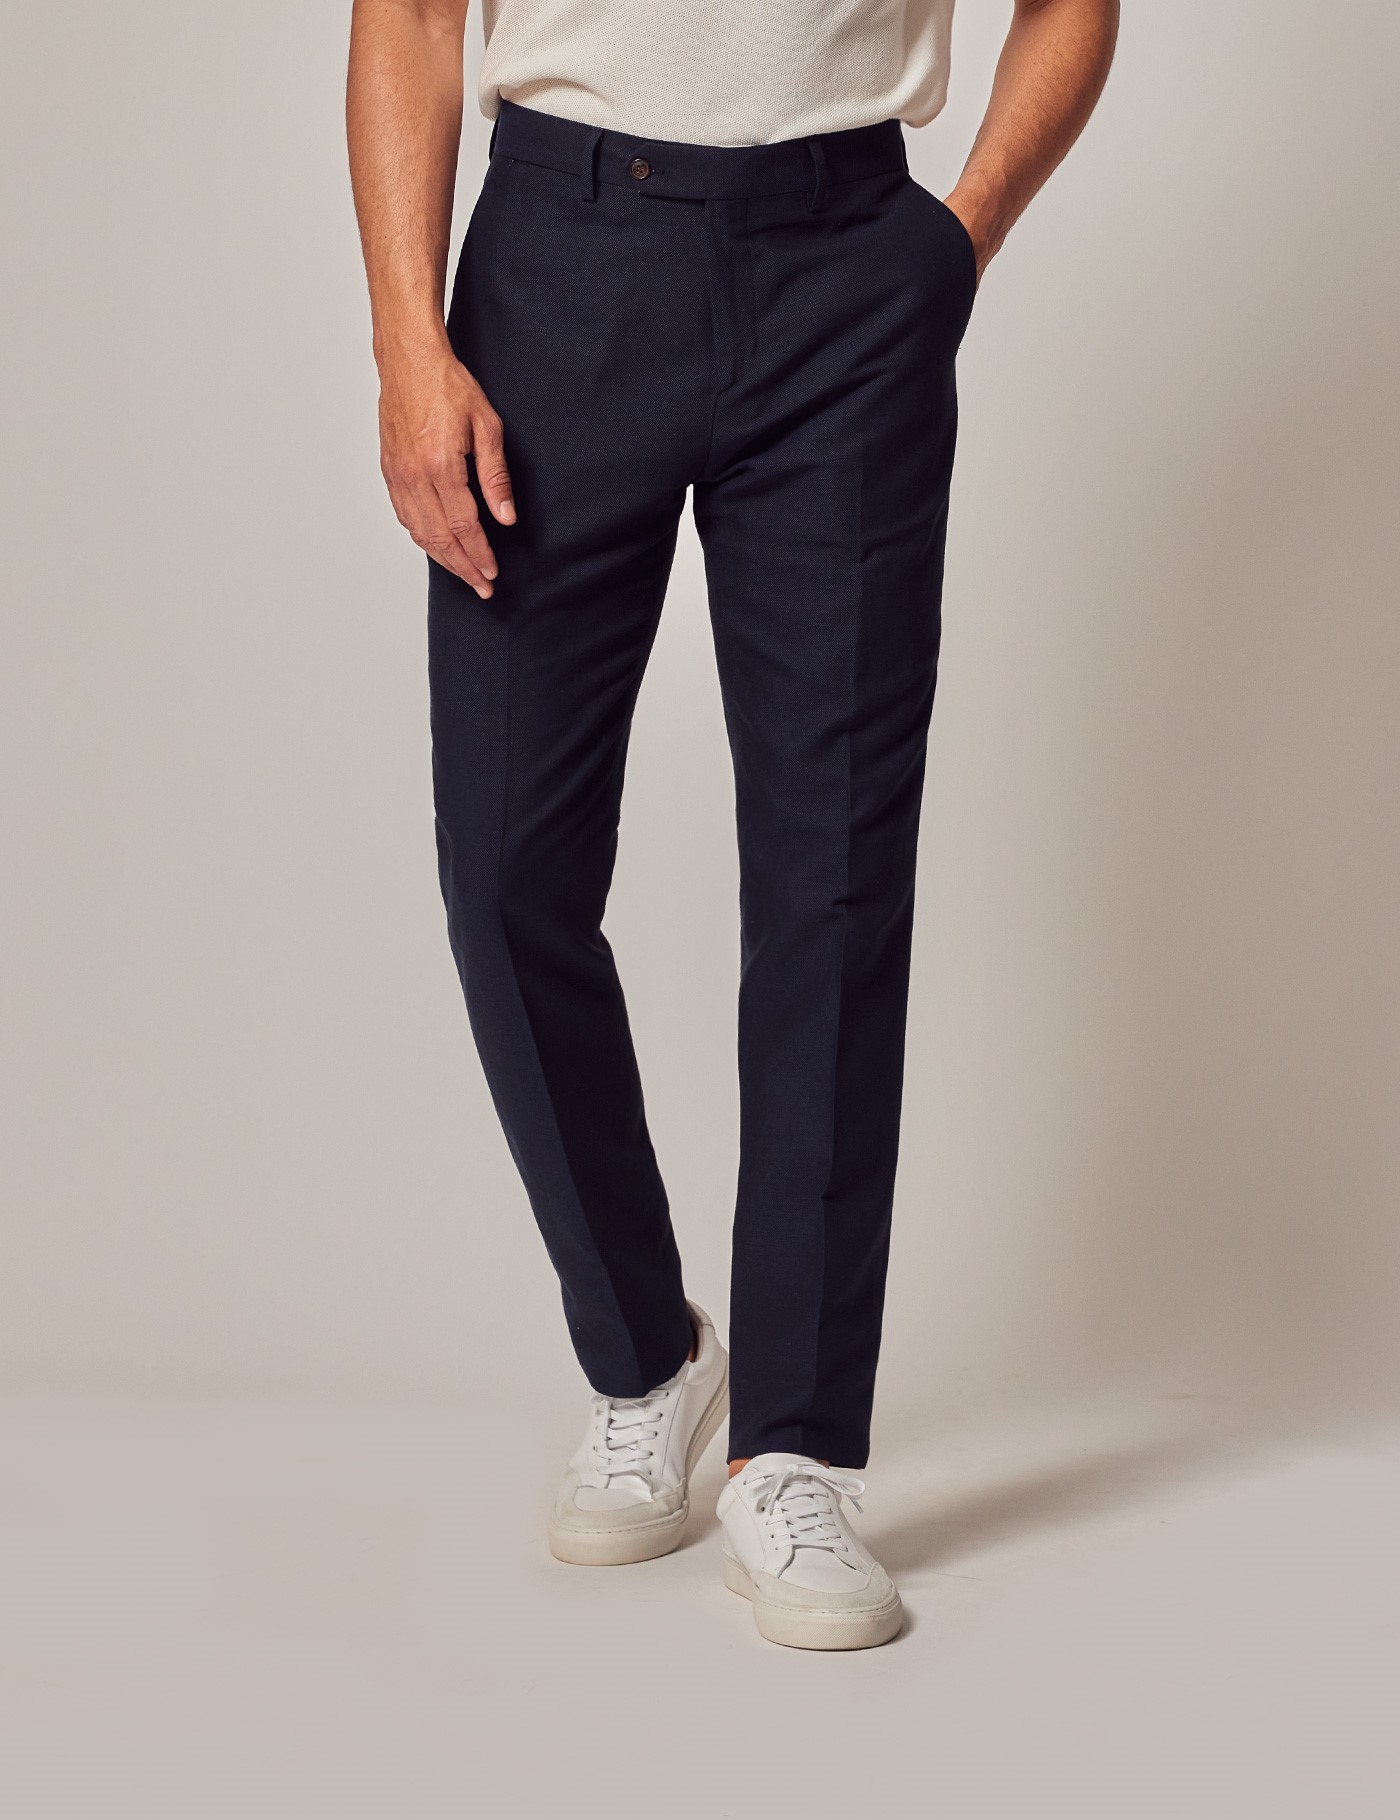 Men Pants Elastic Formal Fit Drape Large Size Straight Suits Dress Business  Office Trouser A B 30 at Amazon Men's Clothing store